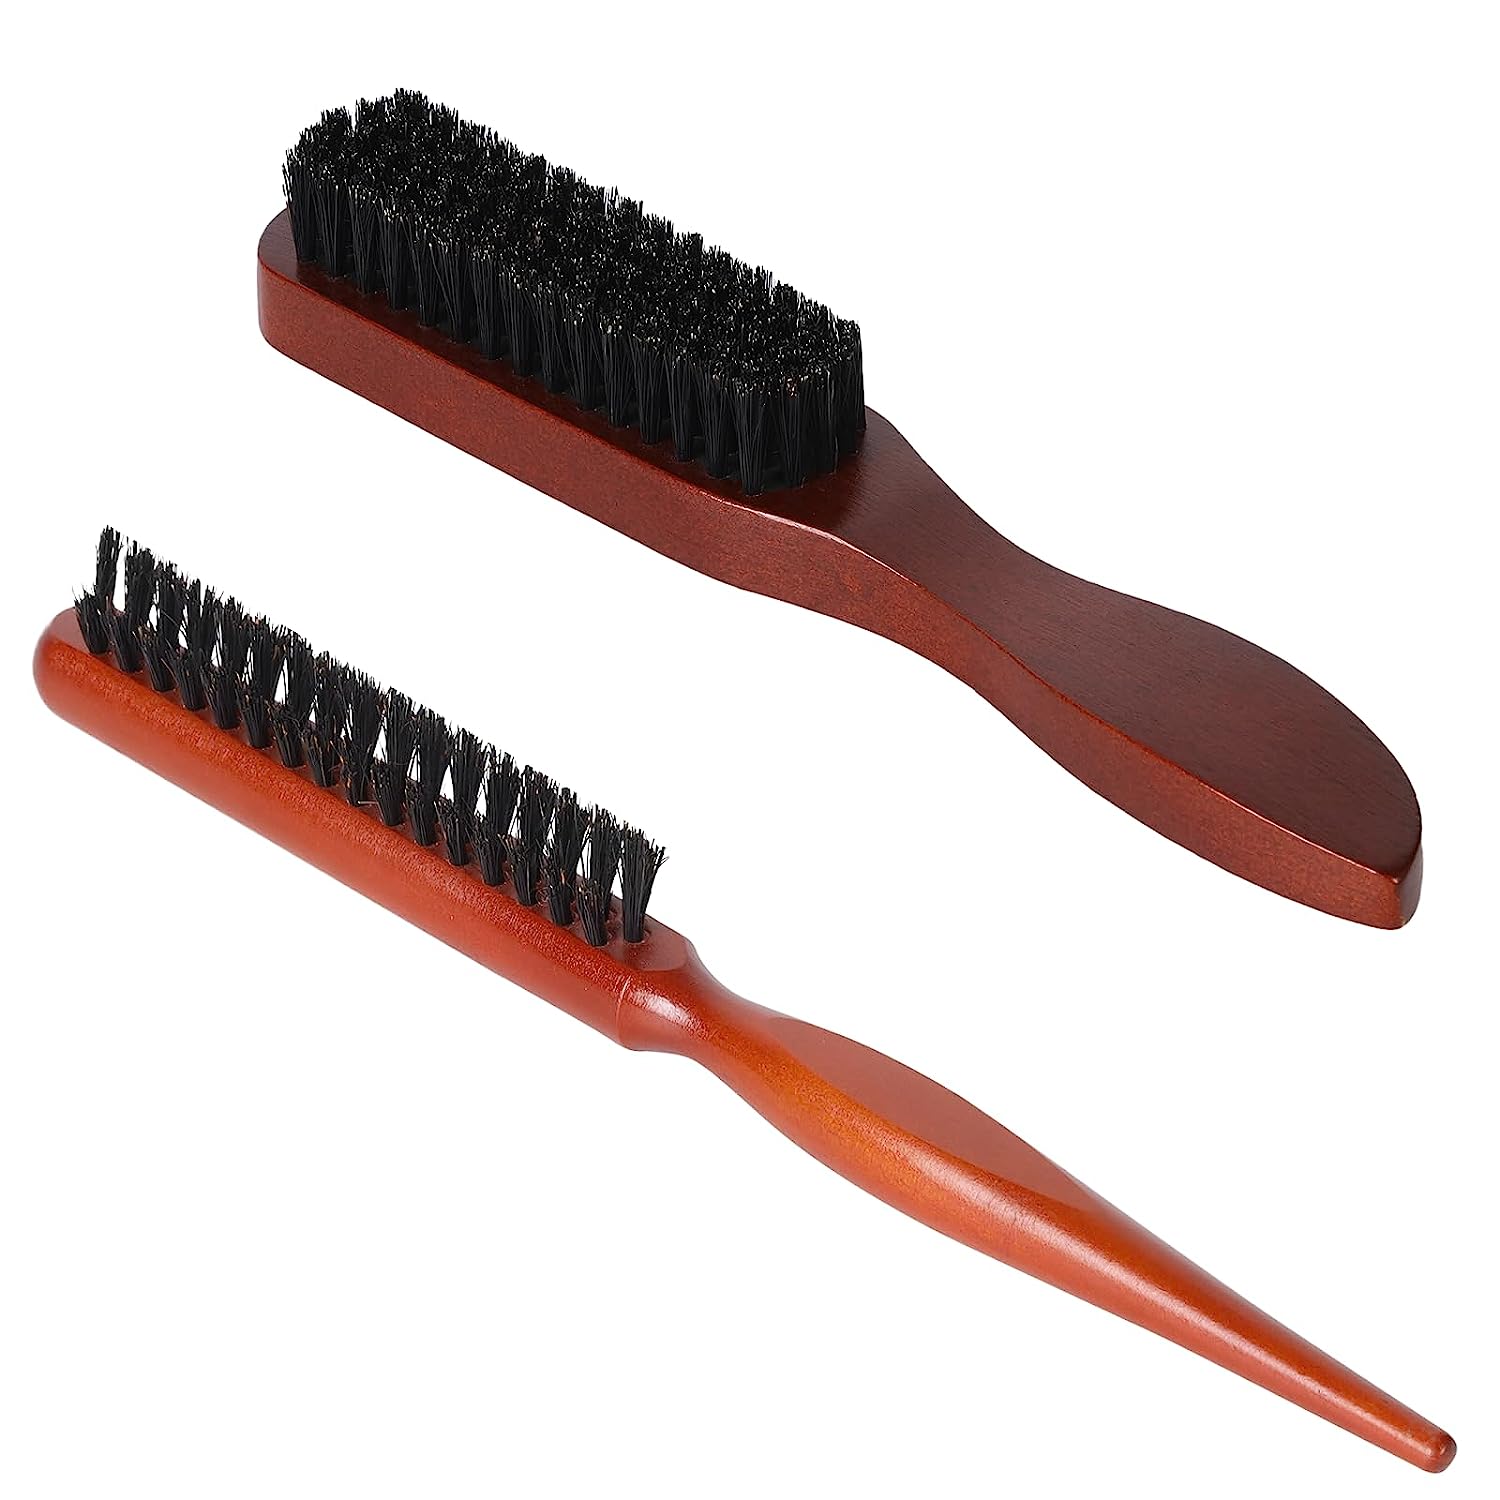 Shockassist 2 Boar Bristle Hair Brushes - Soft Natural Bristles - Large & Small - Hair & Beard Styling